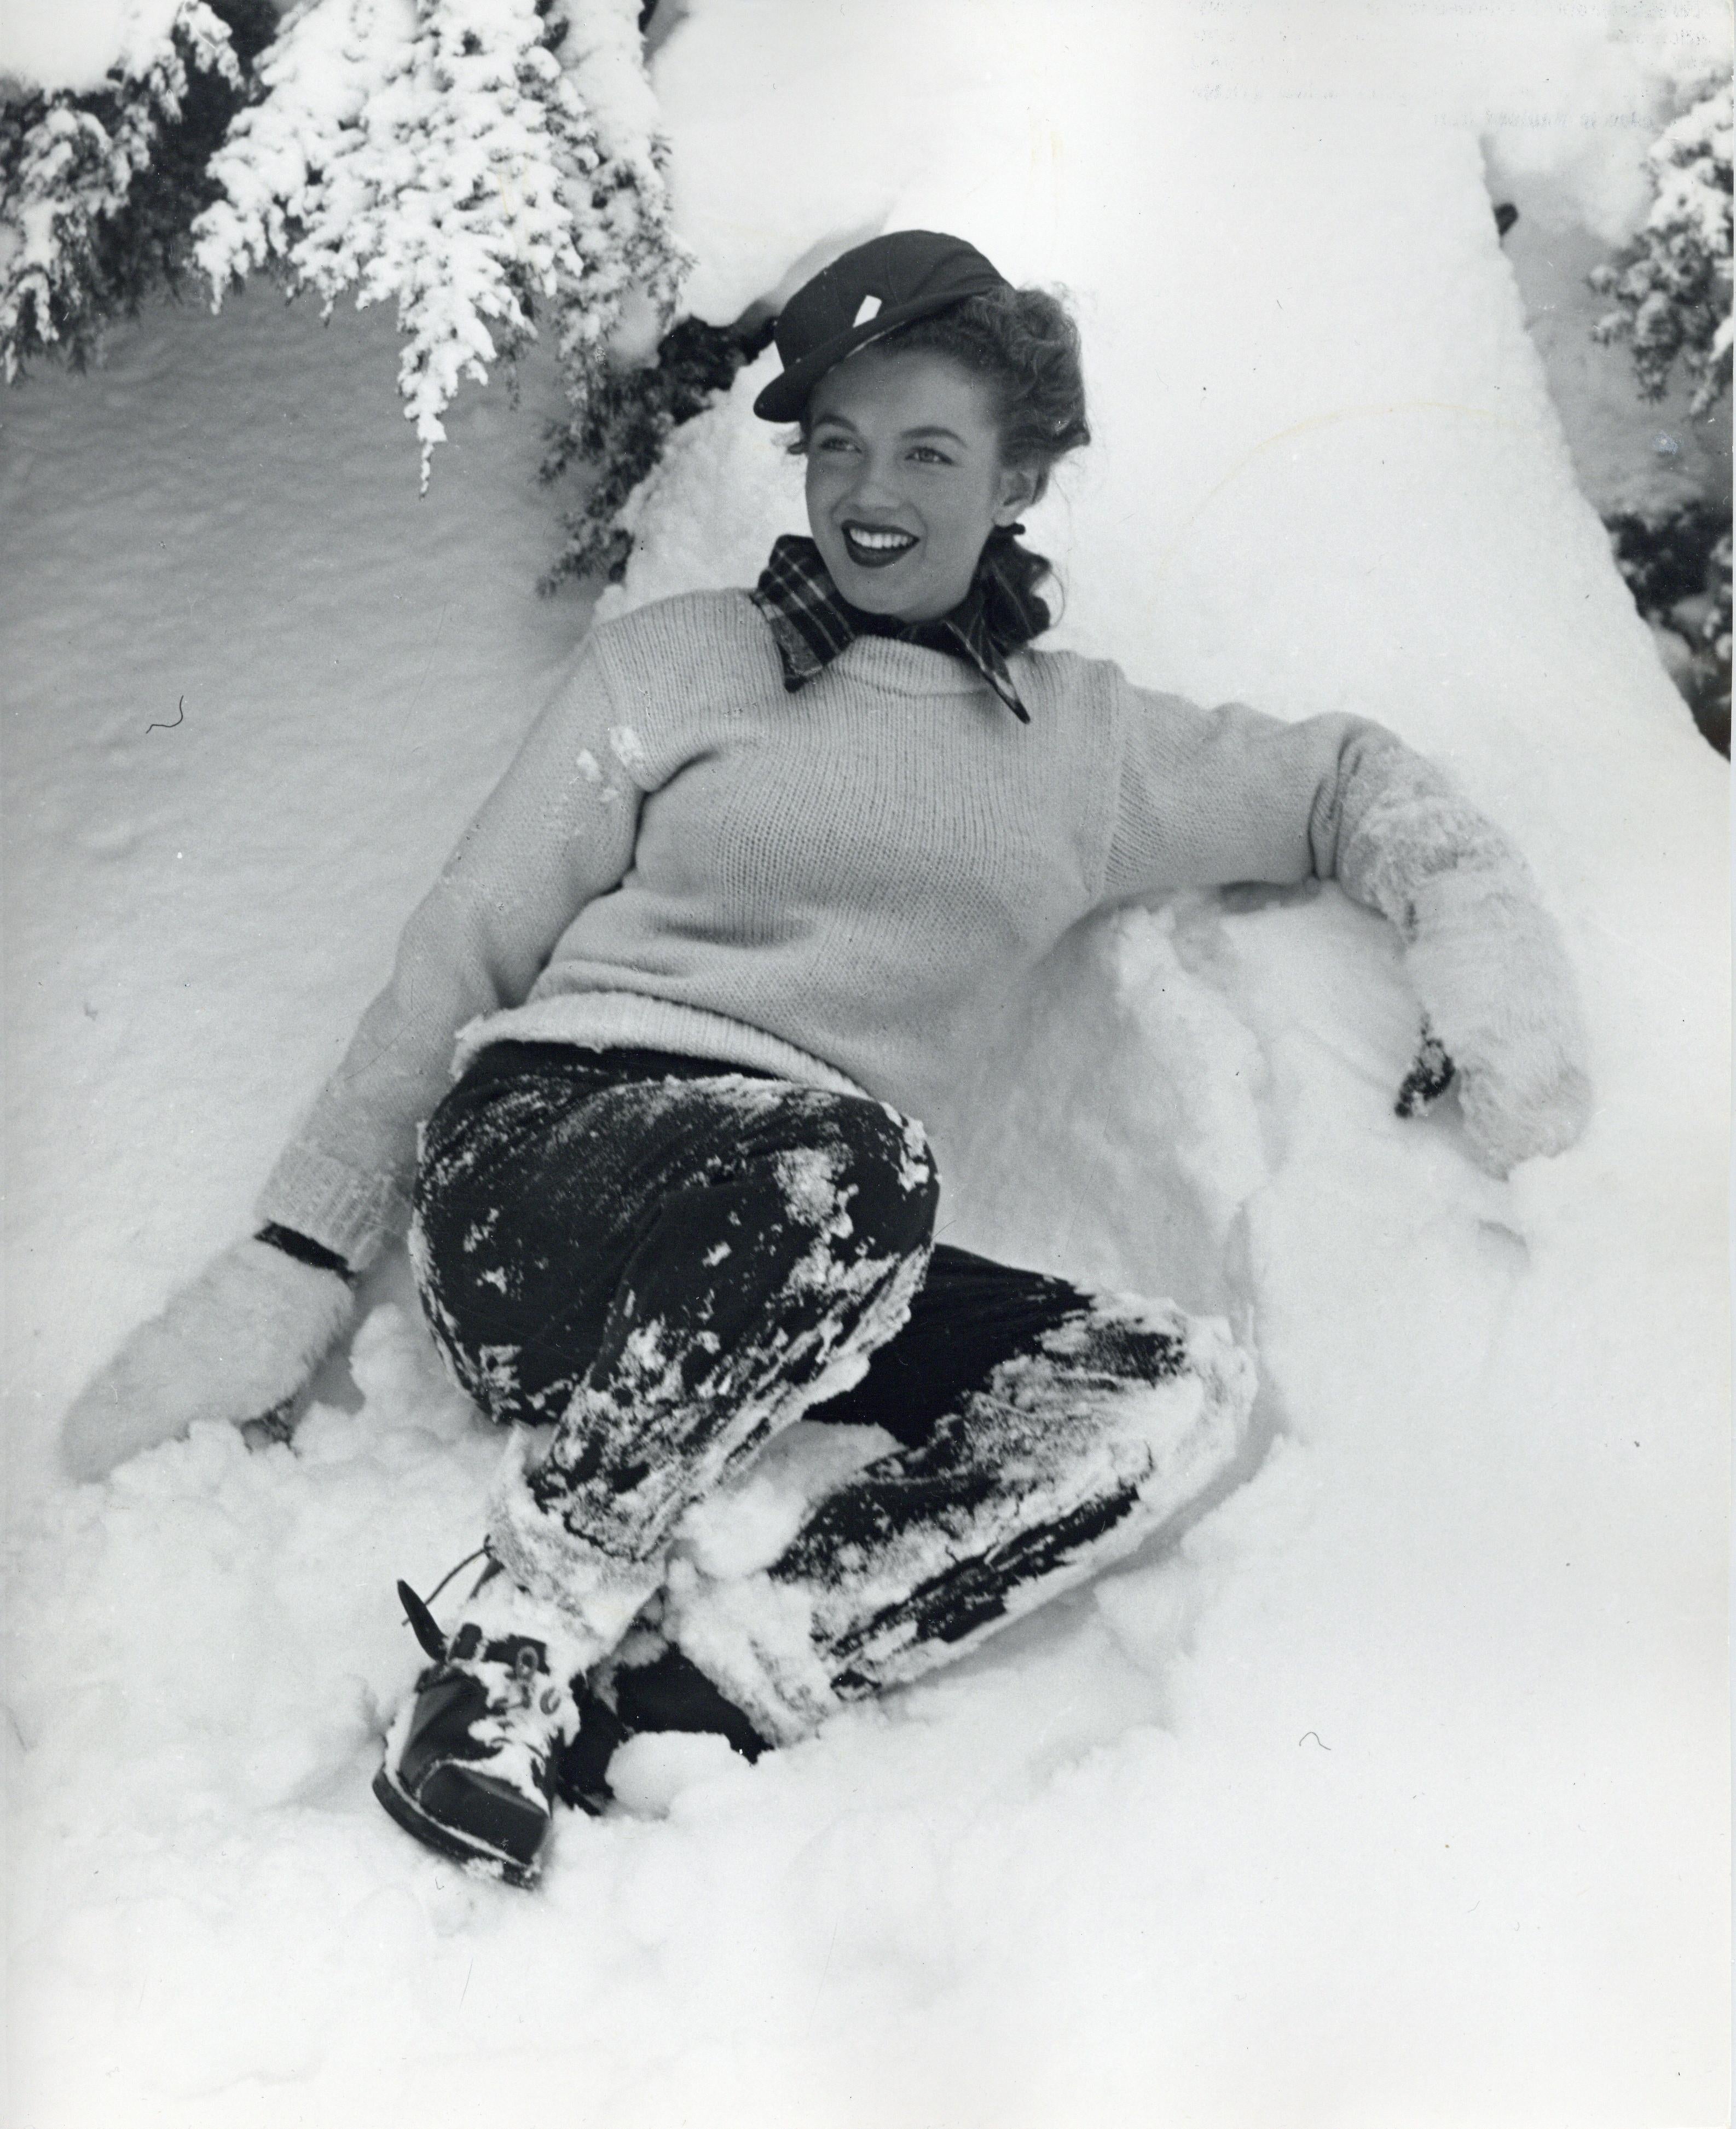 Andre de Dienes Portrait Photograph - Marilyn Monroe 'Norma Jeane' Smiling in the Snow Vintage Original Photograph